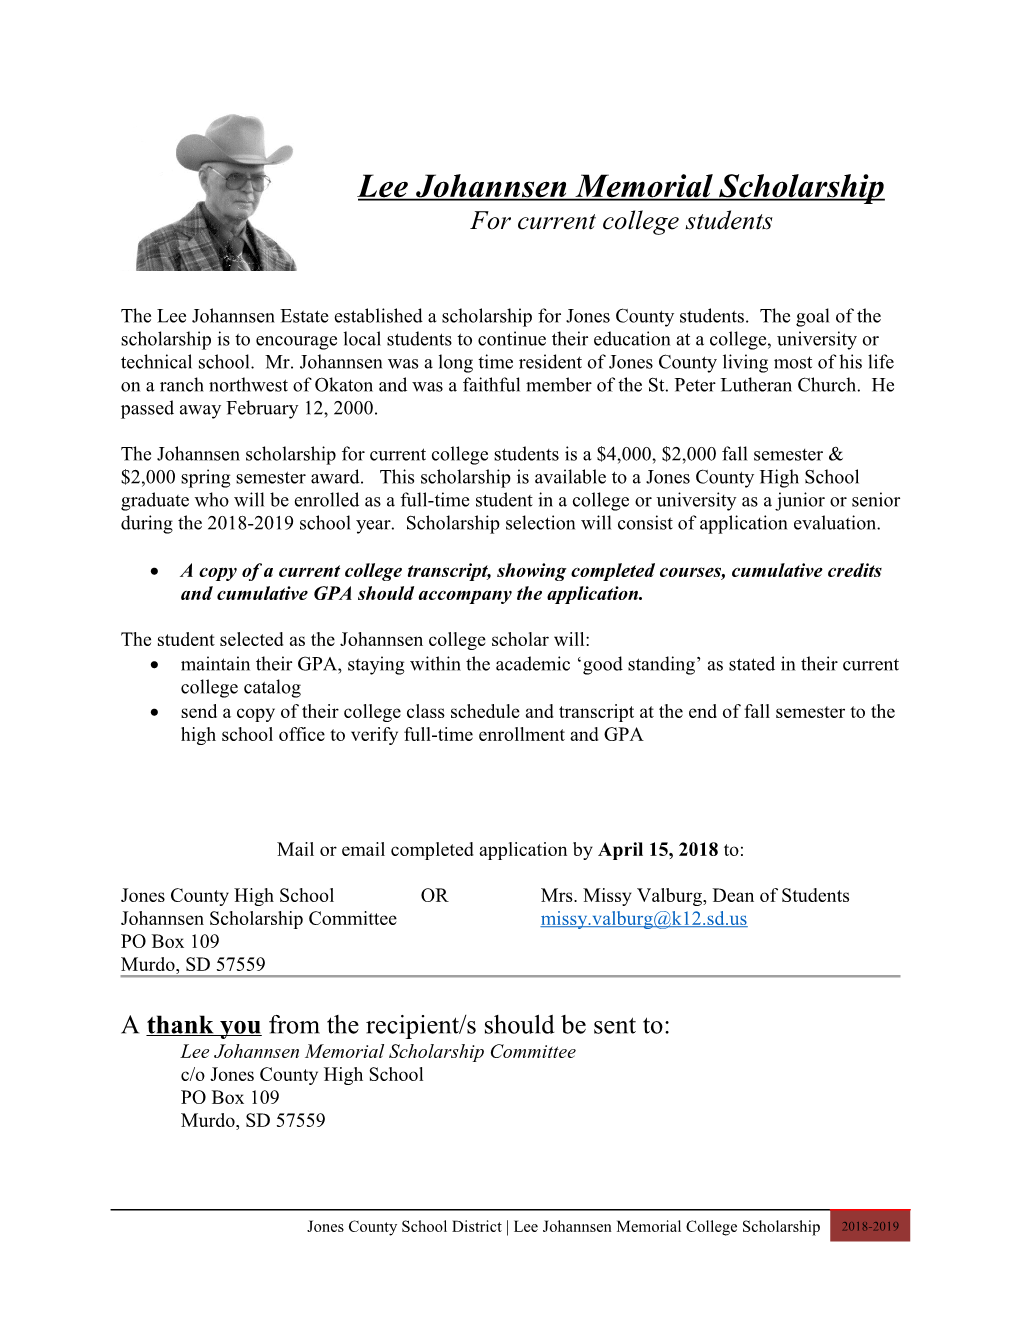 Lee Johannsen College Scholarship